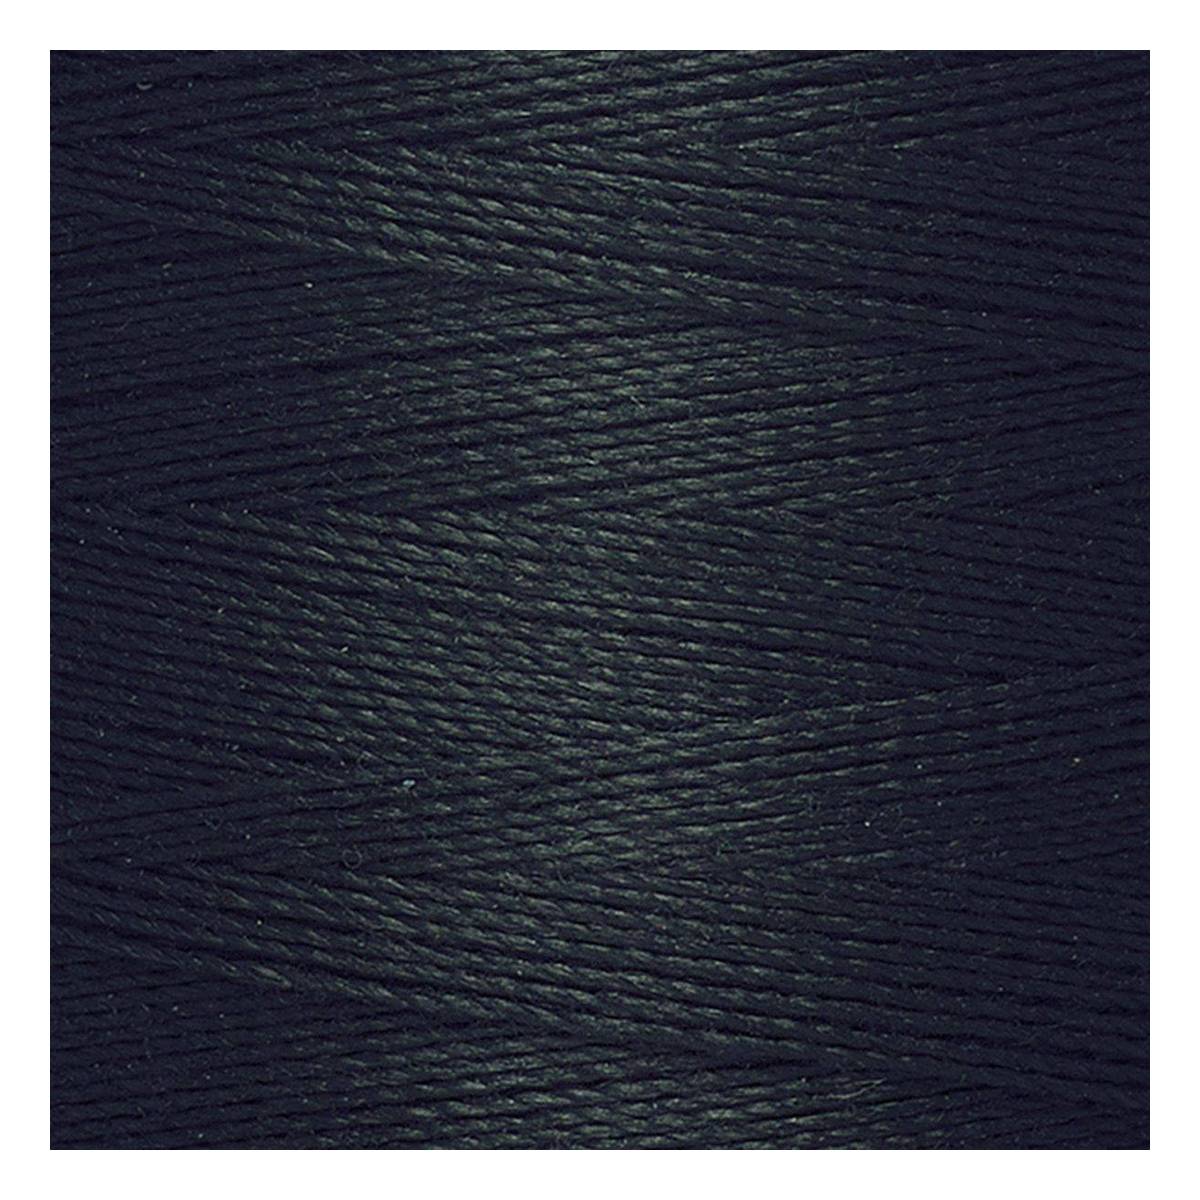 Gutermann Black Sew All Thread 250m (000)